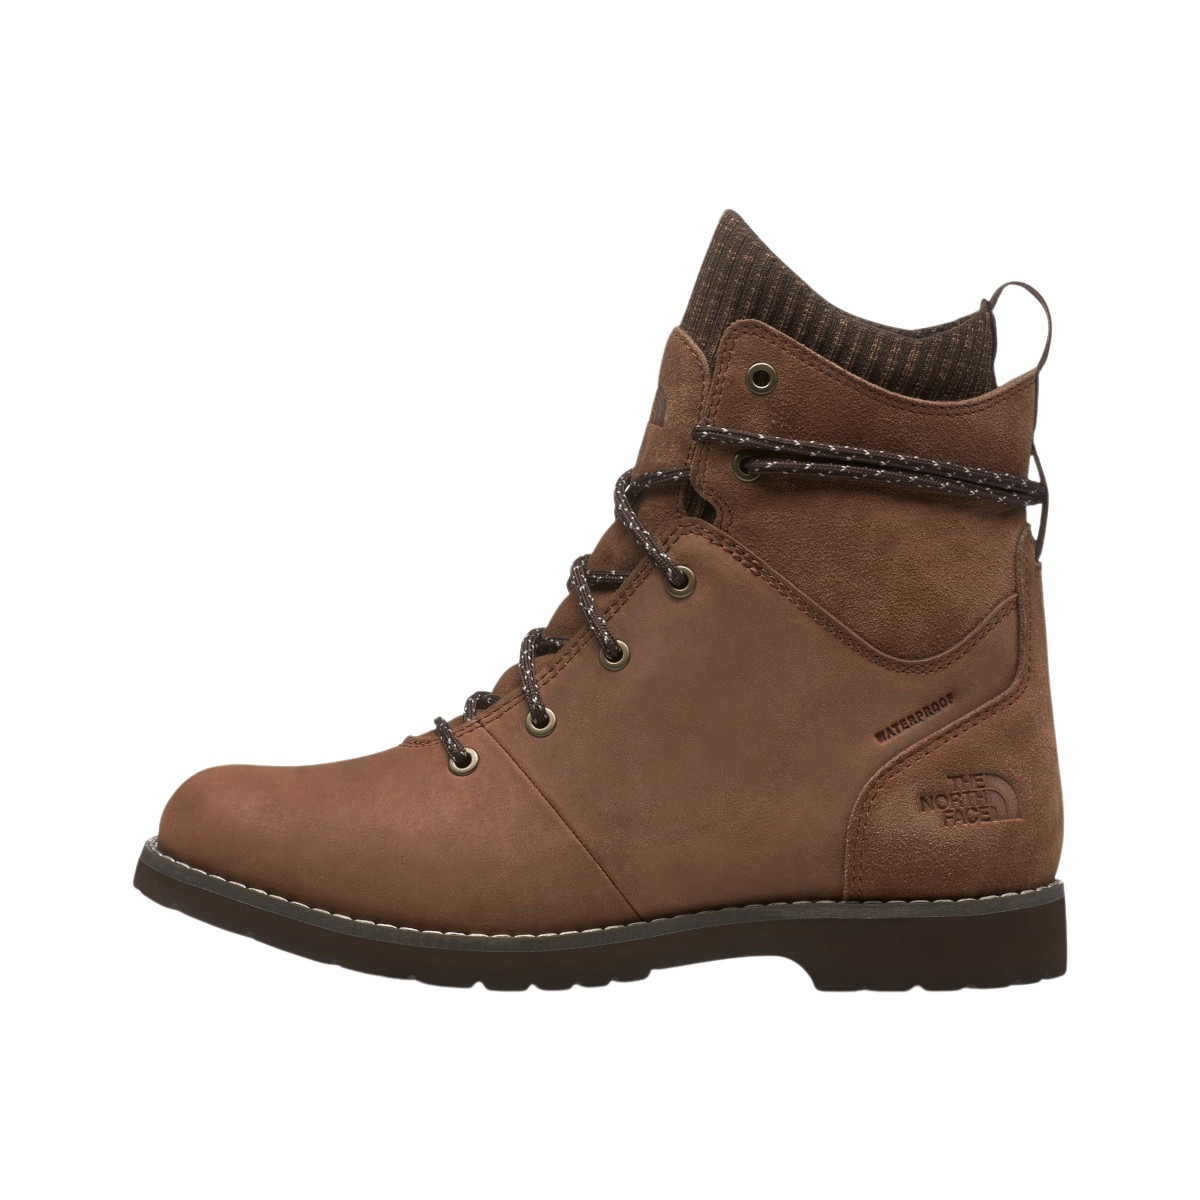 THE NORTH FACE Ballard Lace II Boots Womens Size 6.5 Nubuck Leather Hiking  Boot £36.48 - PicClick UK